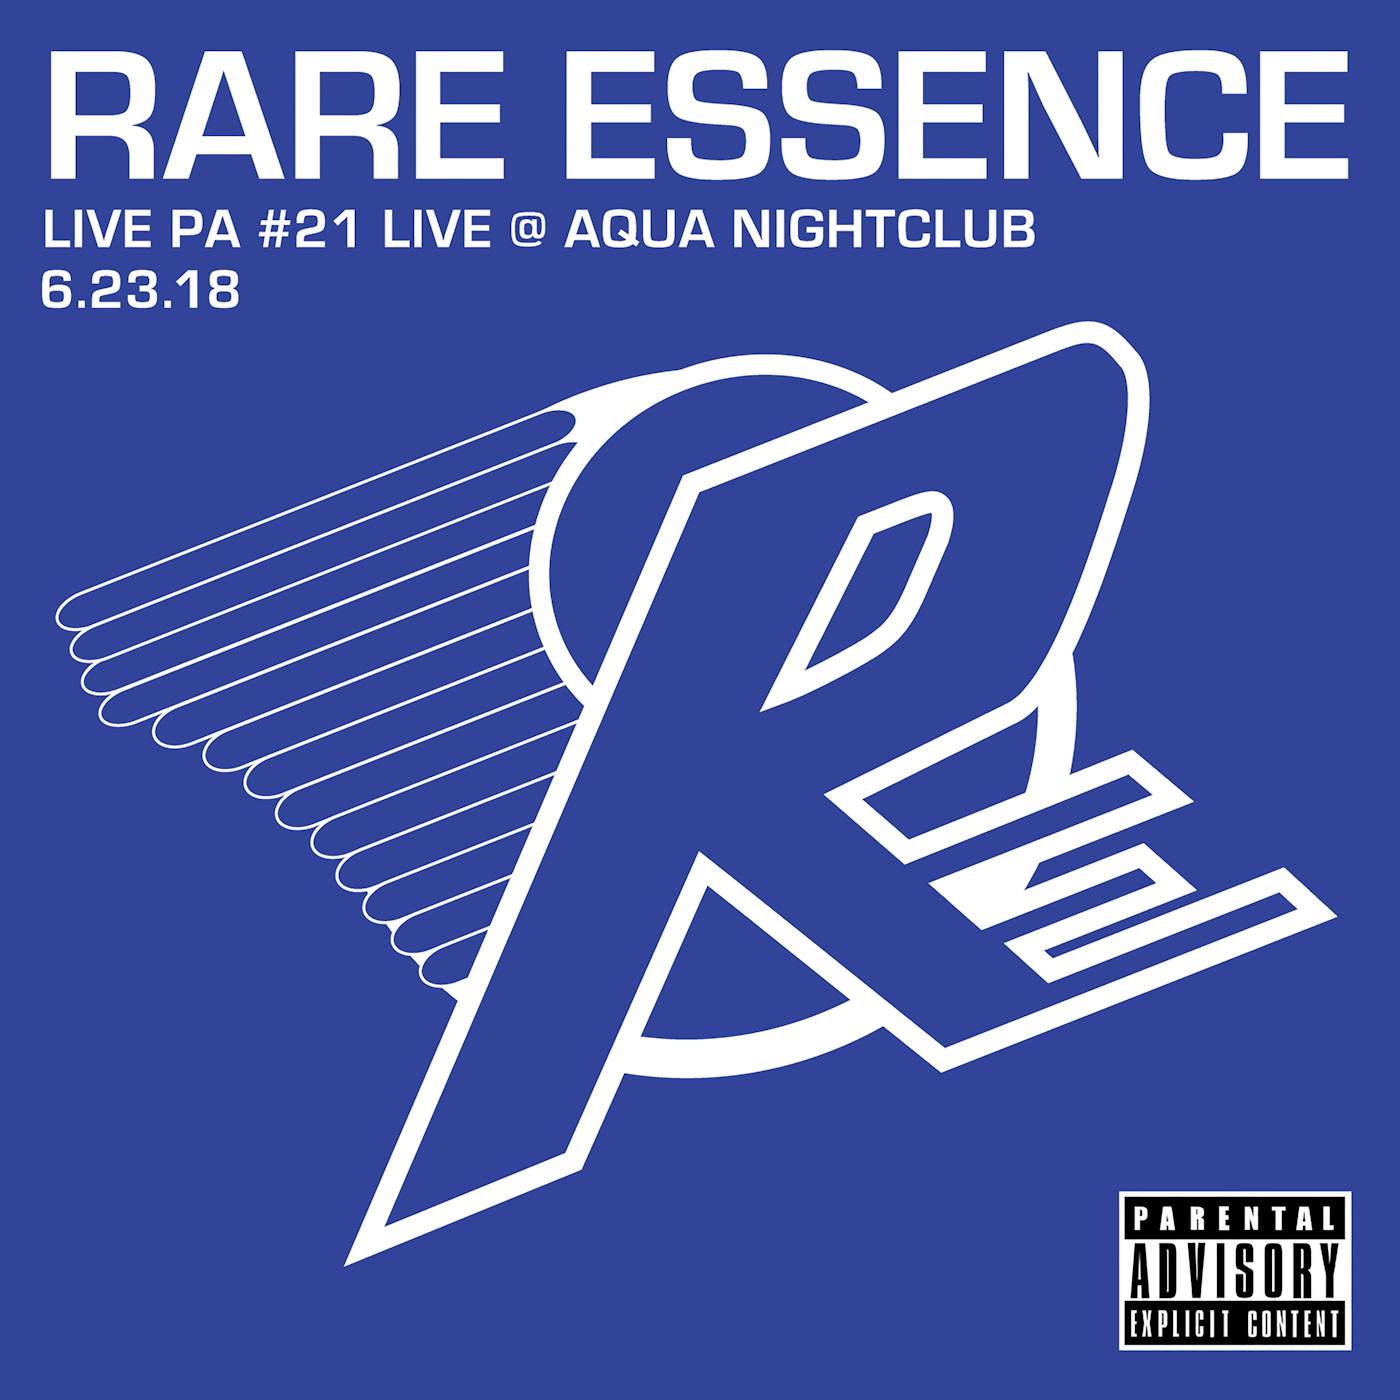 Rare Essence LIVE PA#21: LIVE AT AQUA NIGHTCLUB 6-23-18 CD